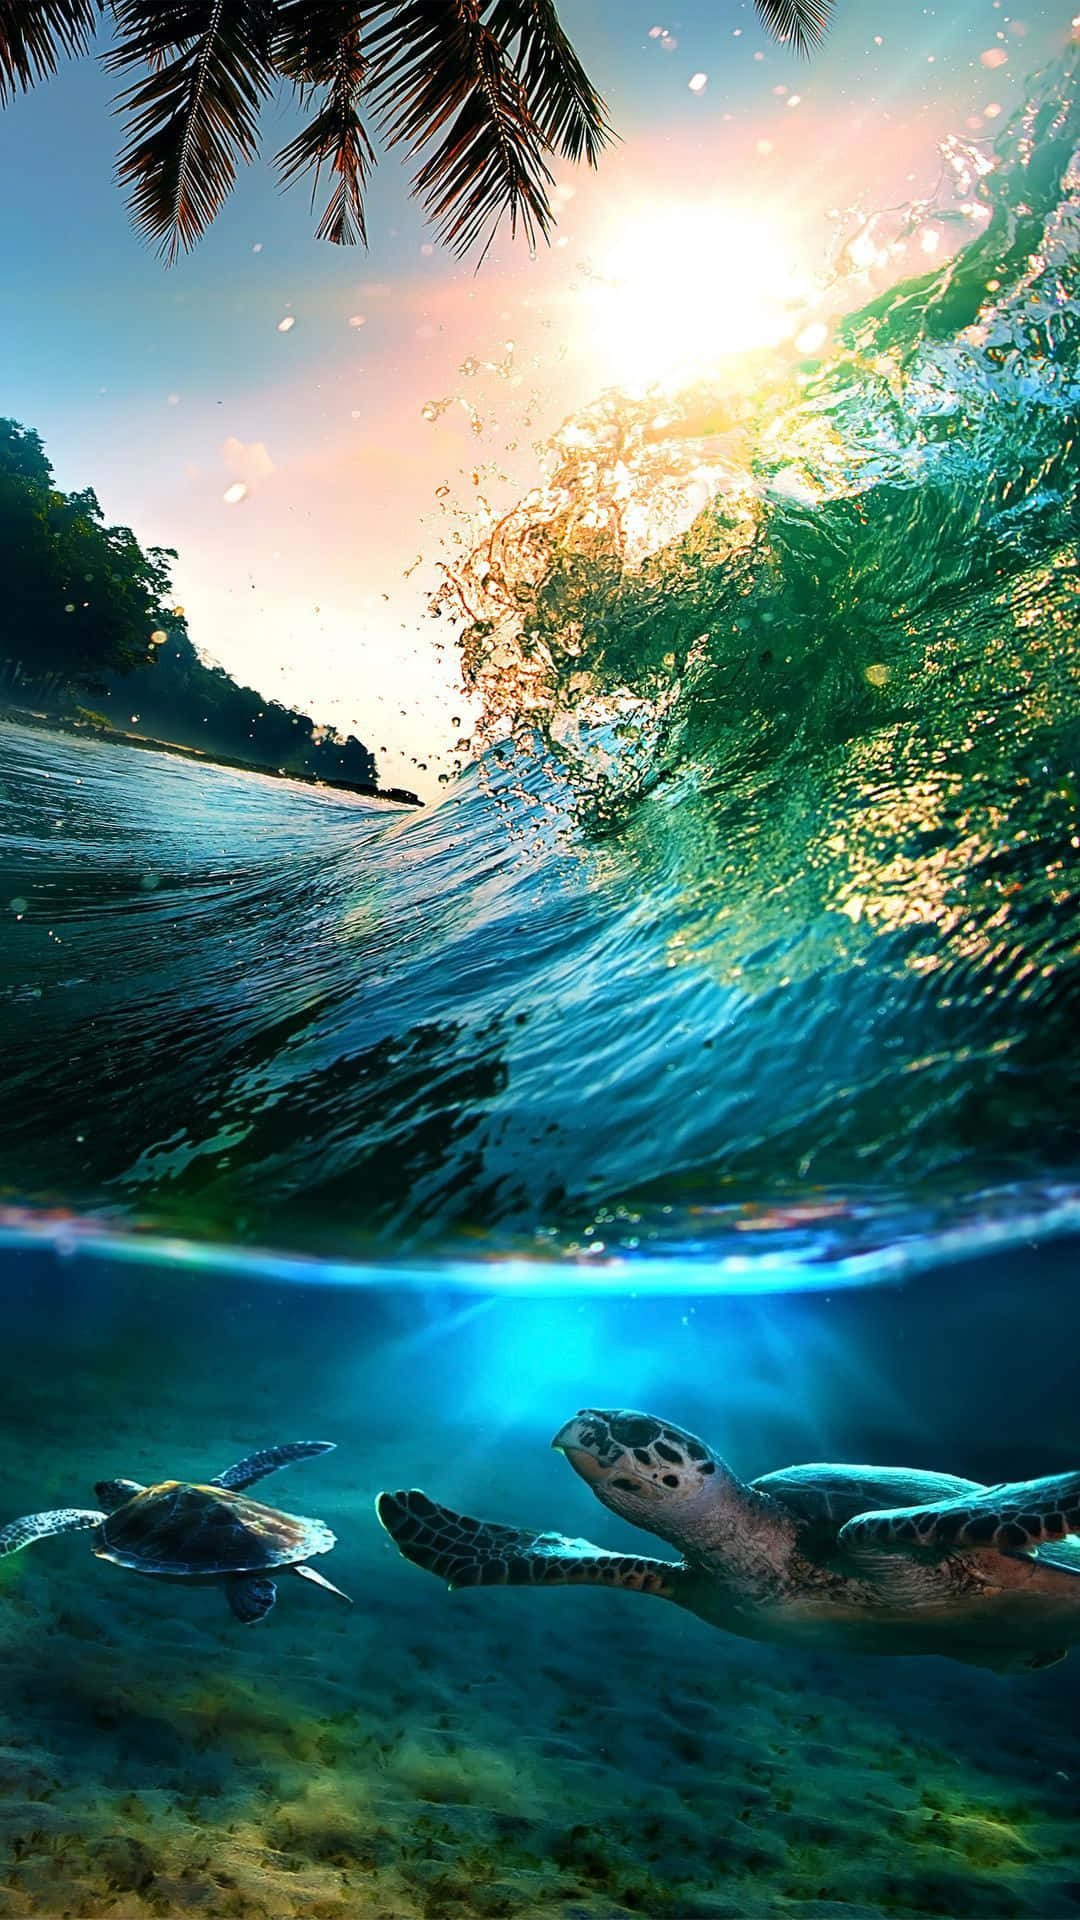 Beautiful Sea Waves&Swimming Turtles Wallpaper